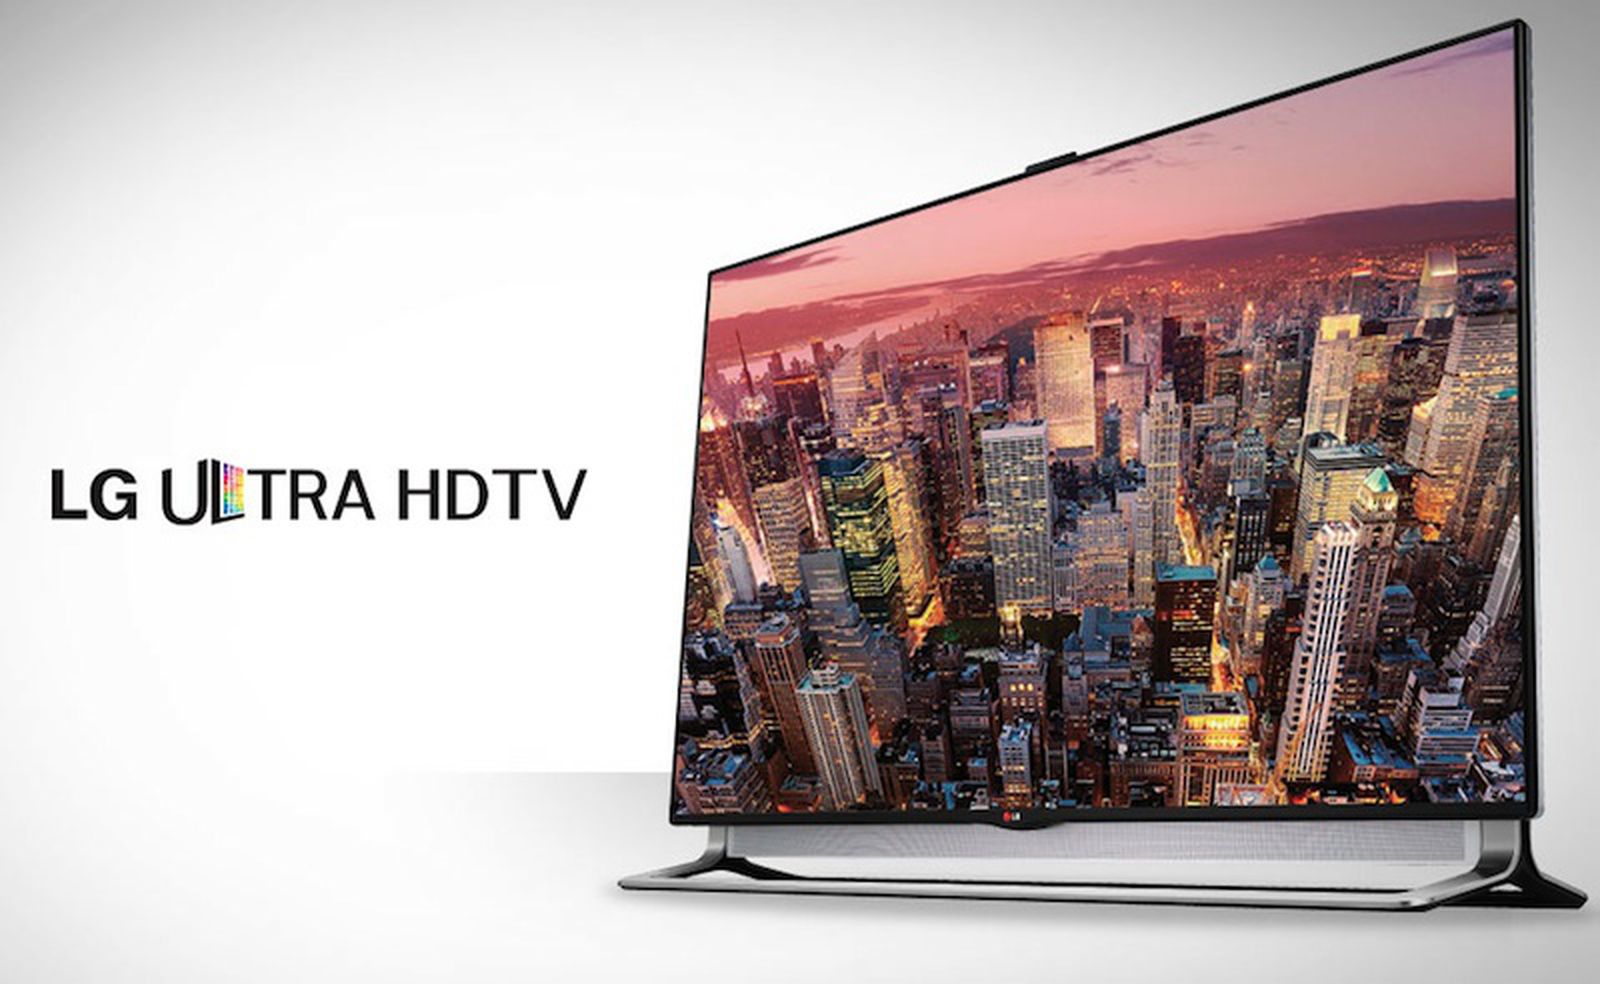 Lg ultra. LG Ultra 4k. LG Ultra HDTV. Рекламный баннер телевизор. LG Ultra HD TV реклама.